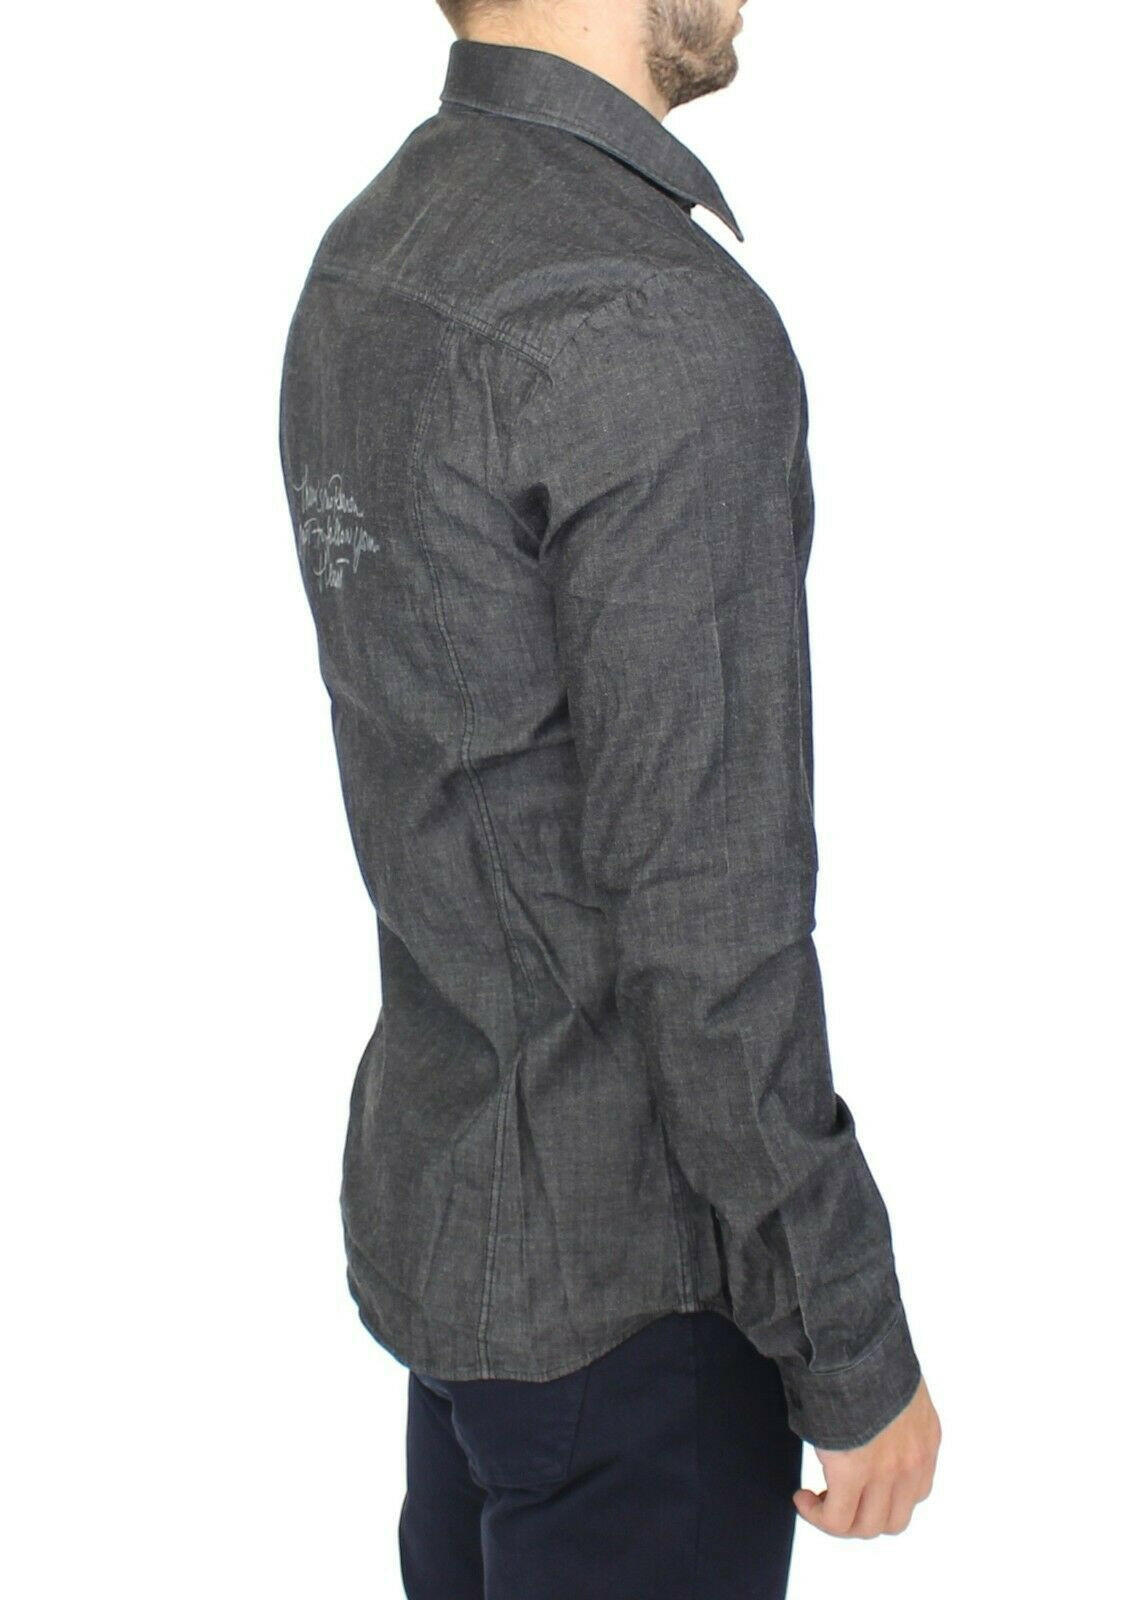 Ermanno Scervino Denim Jeans Cotton Casual Gray Stretch Shirt - GENUINE AUTHENTIC BRAND LLC  